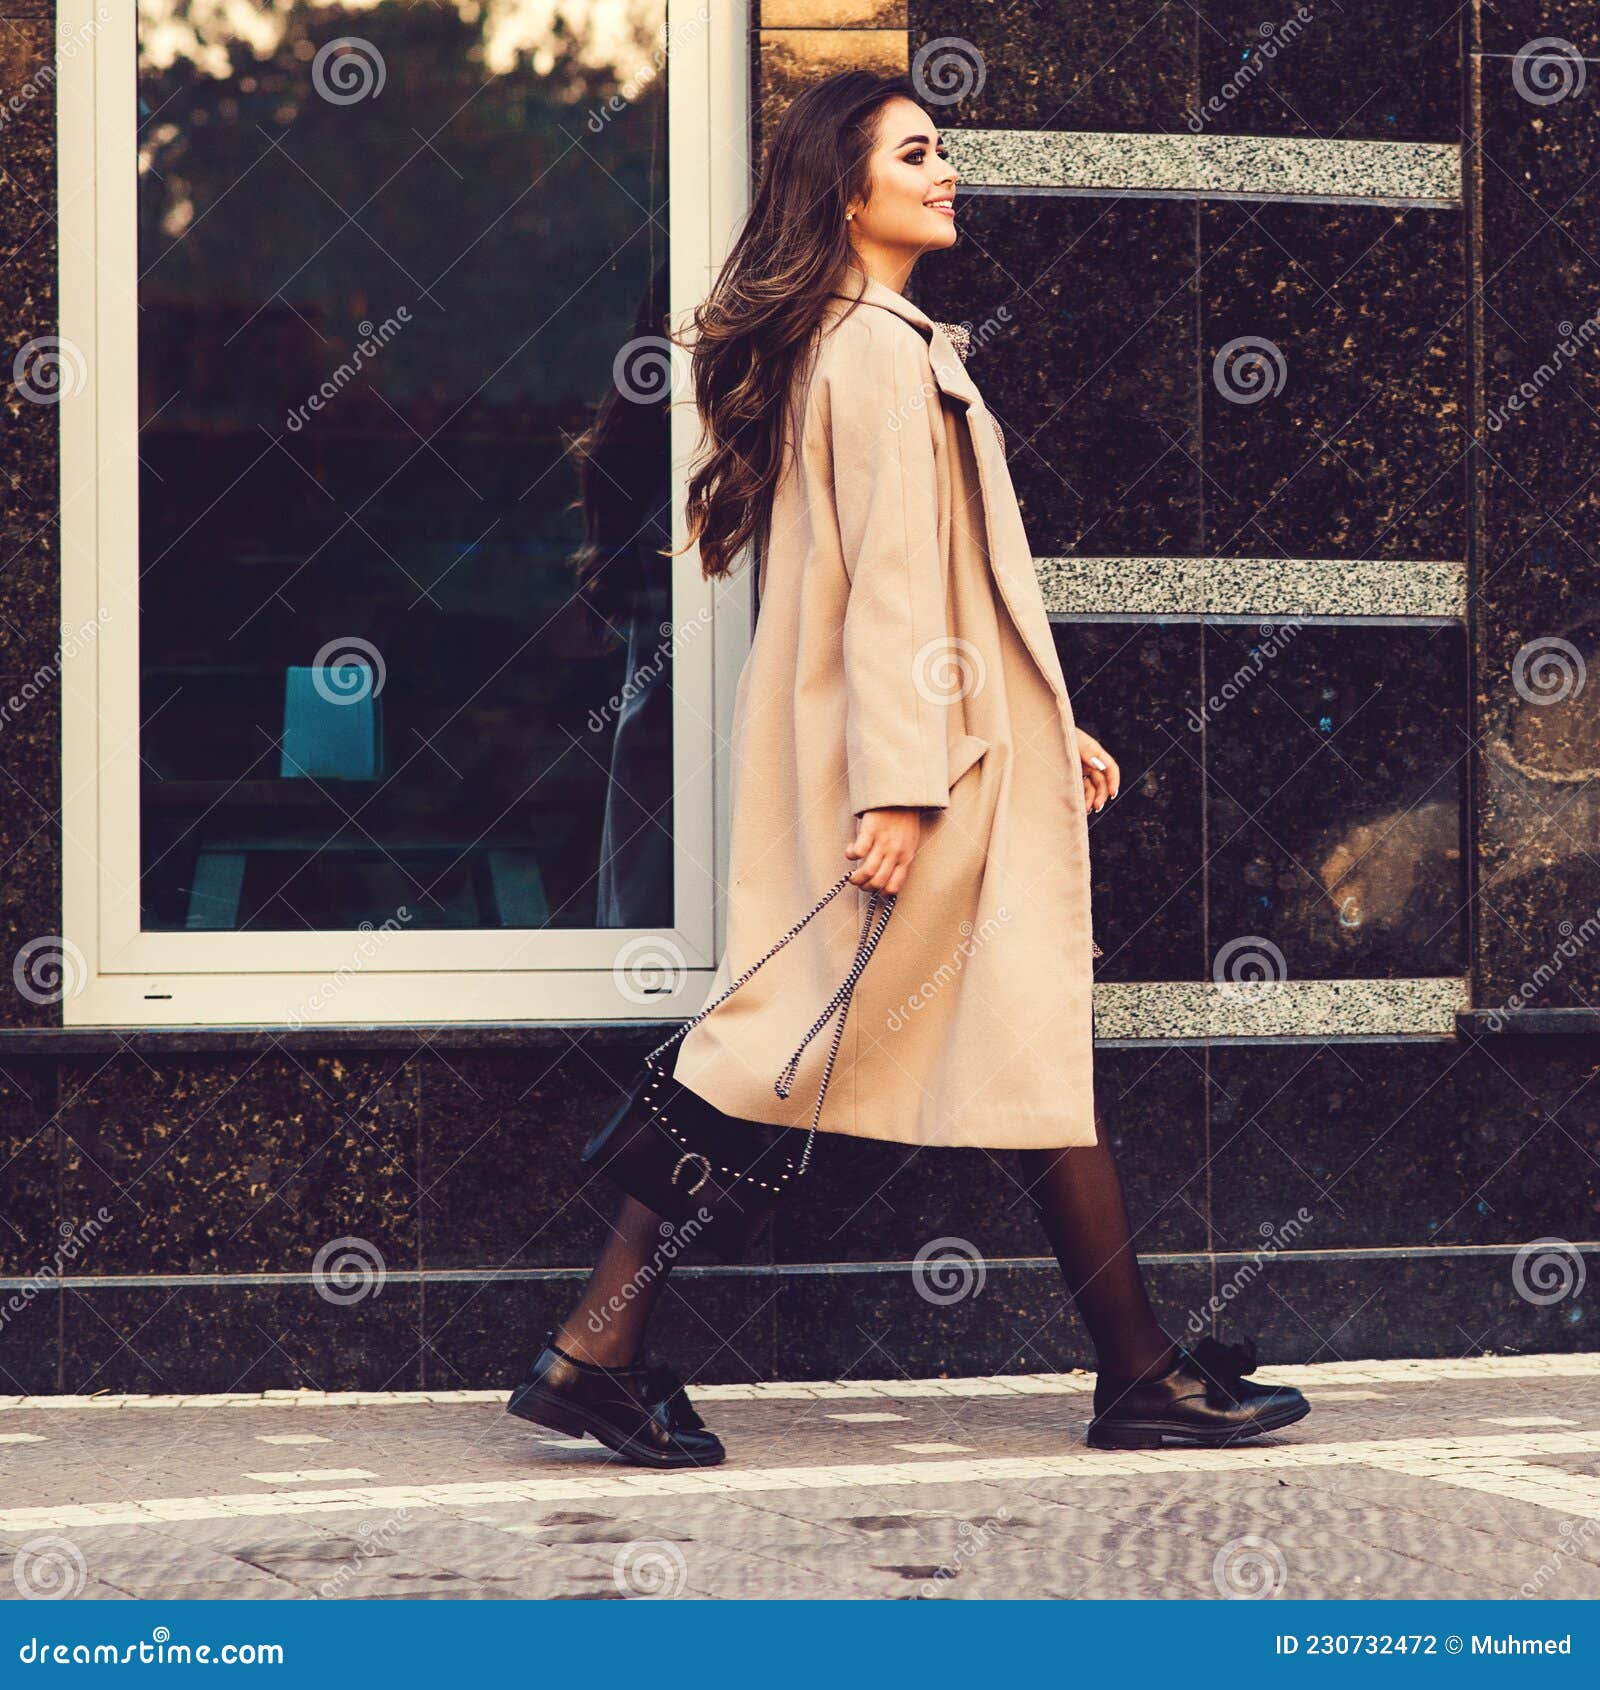  Woman walking in the street holding fashion handbag